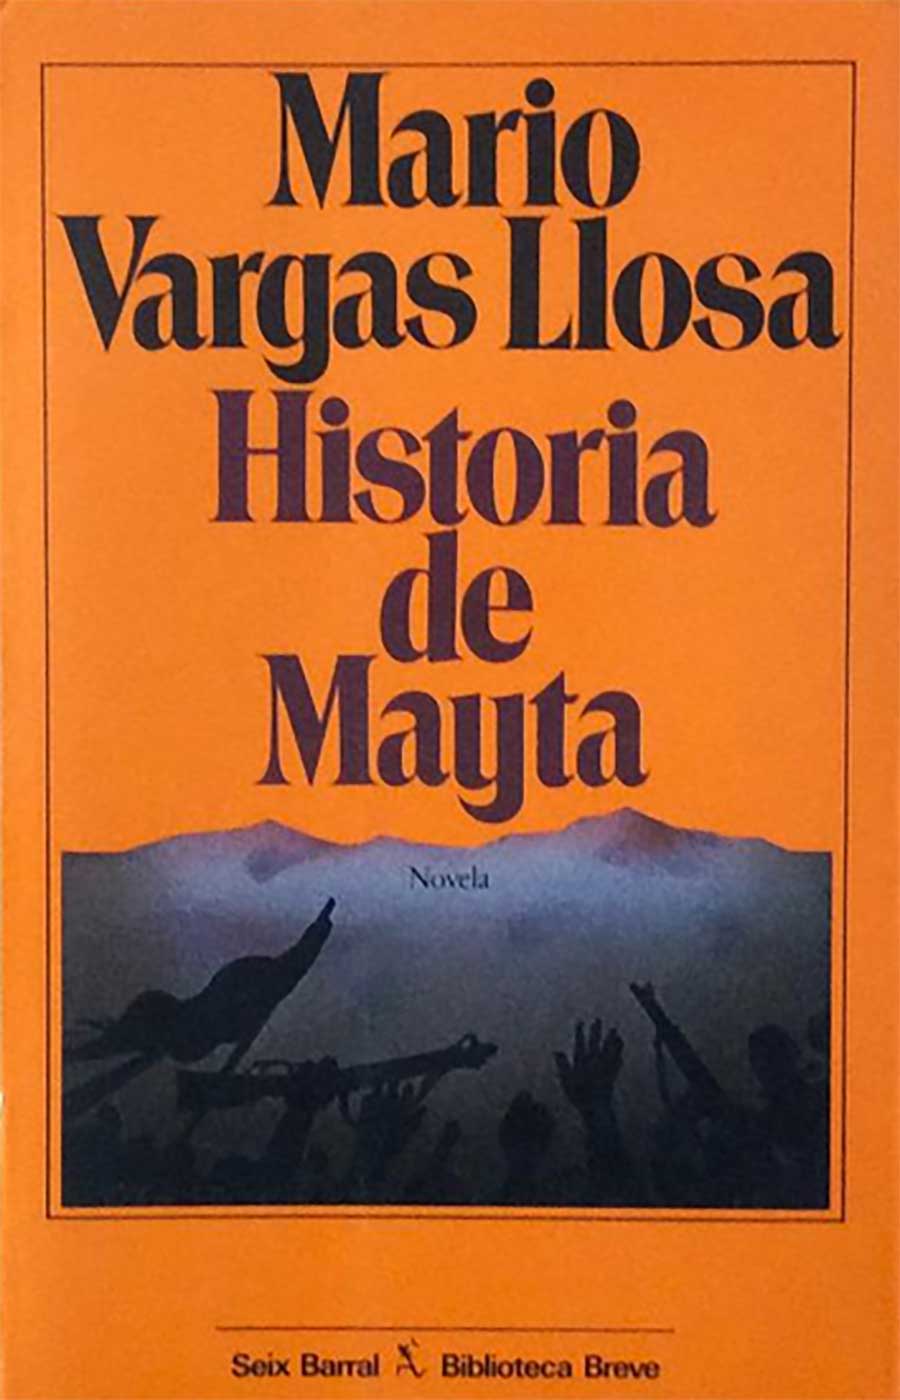 Historia de Mayta, sétima novela de Mario Vargas Llosa, Premio Nobel de Literatura 2010.